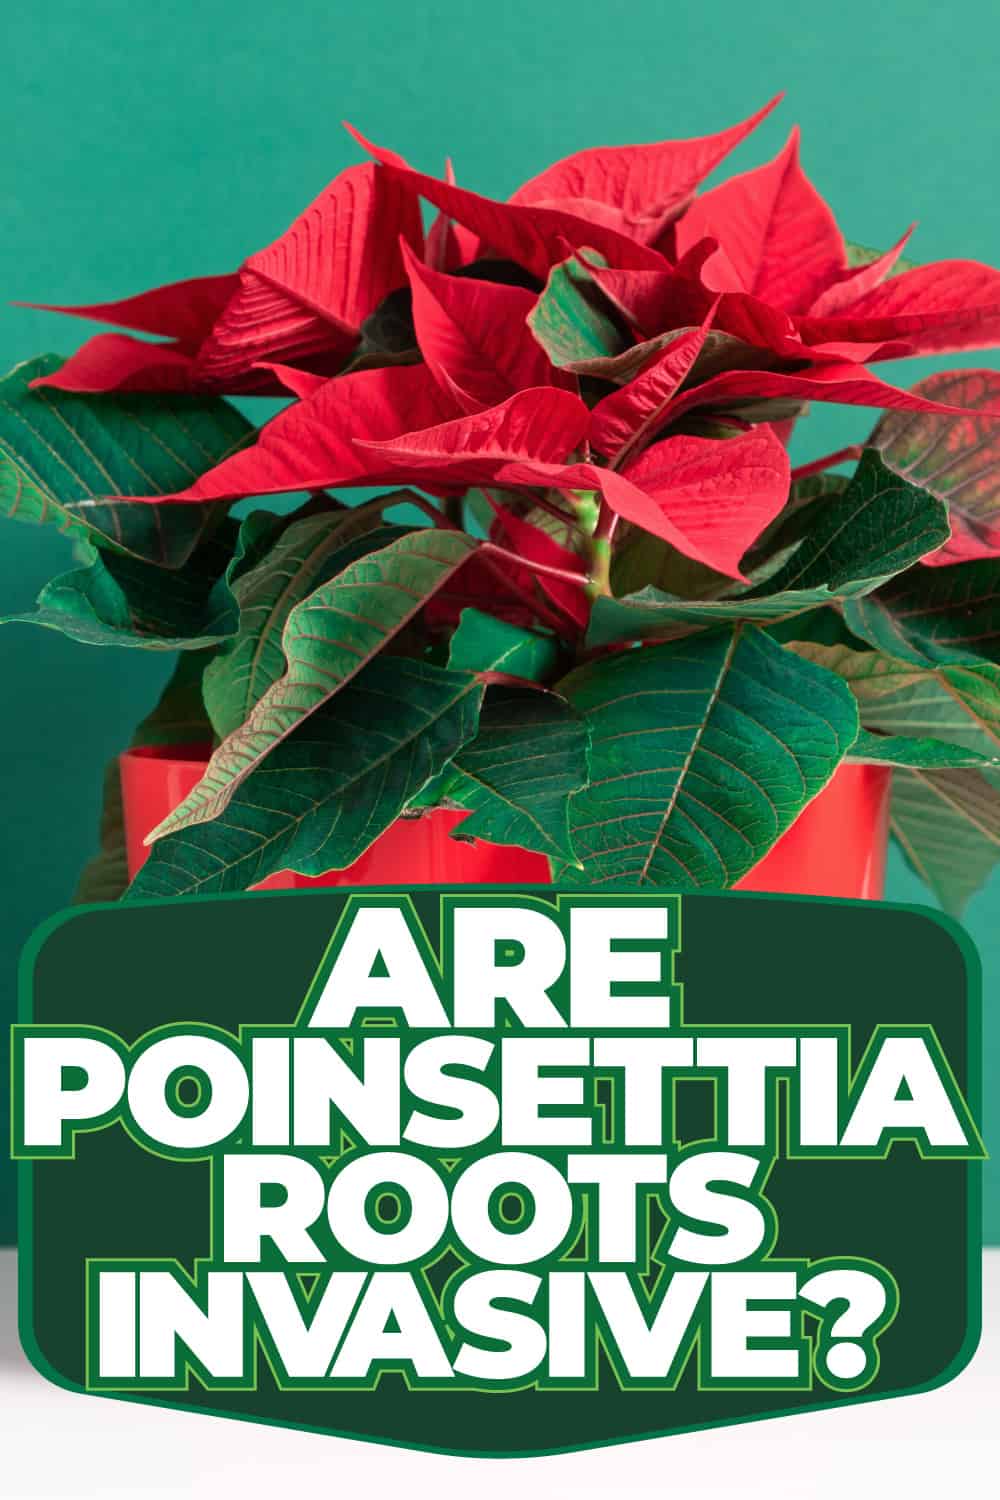 Are Poinsettia Roots Invasive?